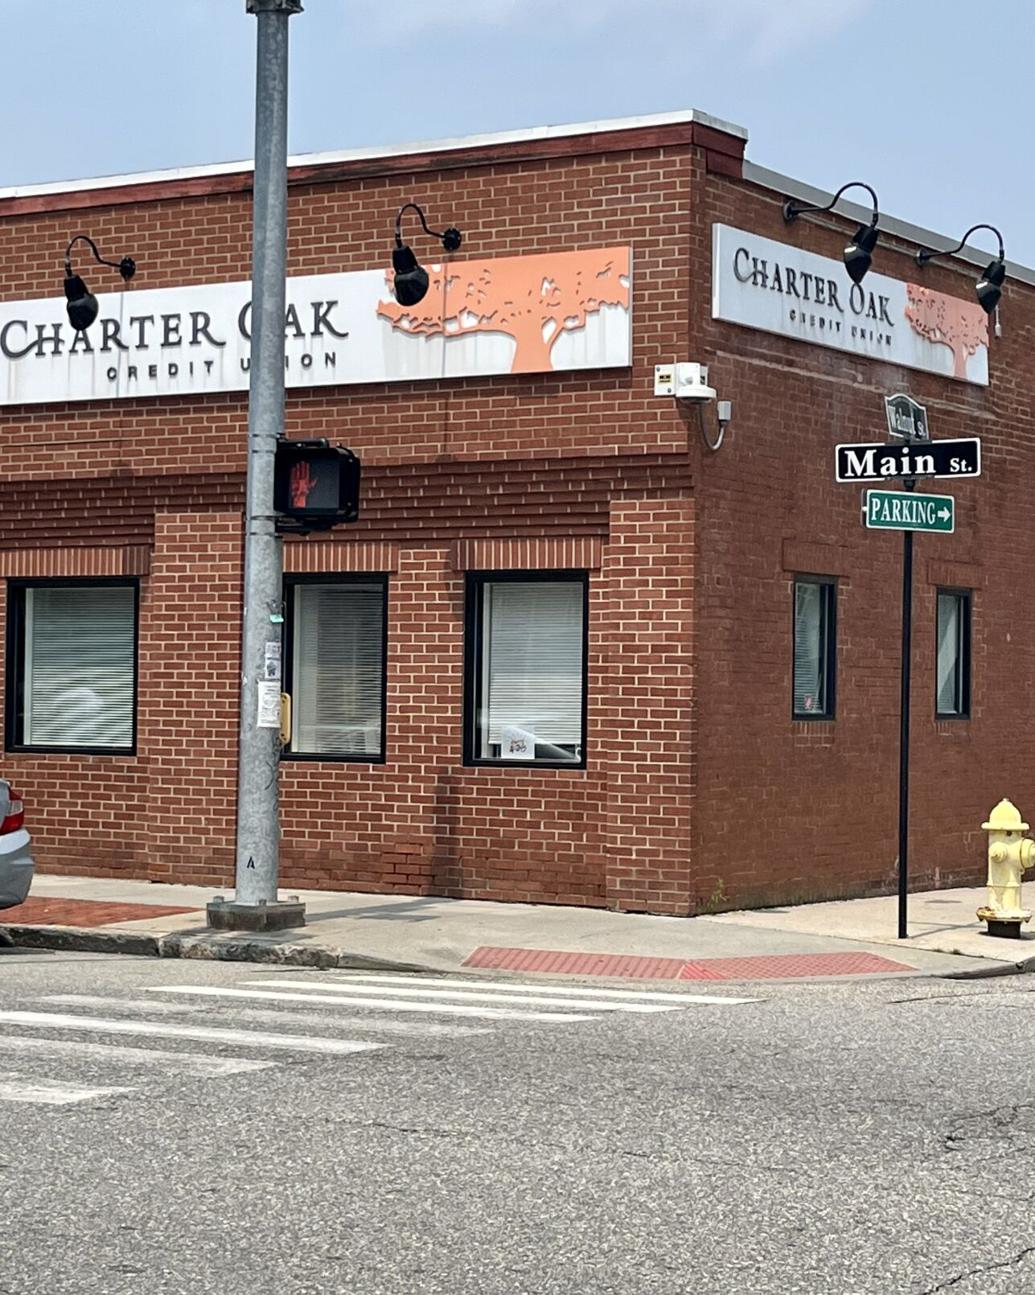 Charter Oak Credit Union Website Shut Down, Security Concerns News